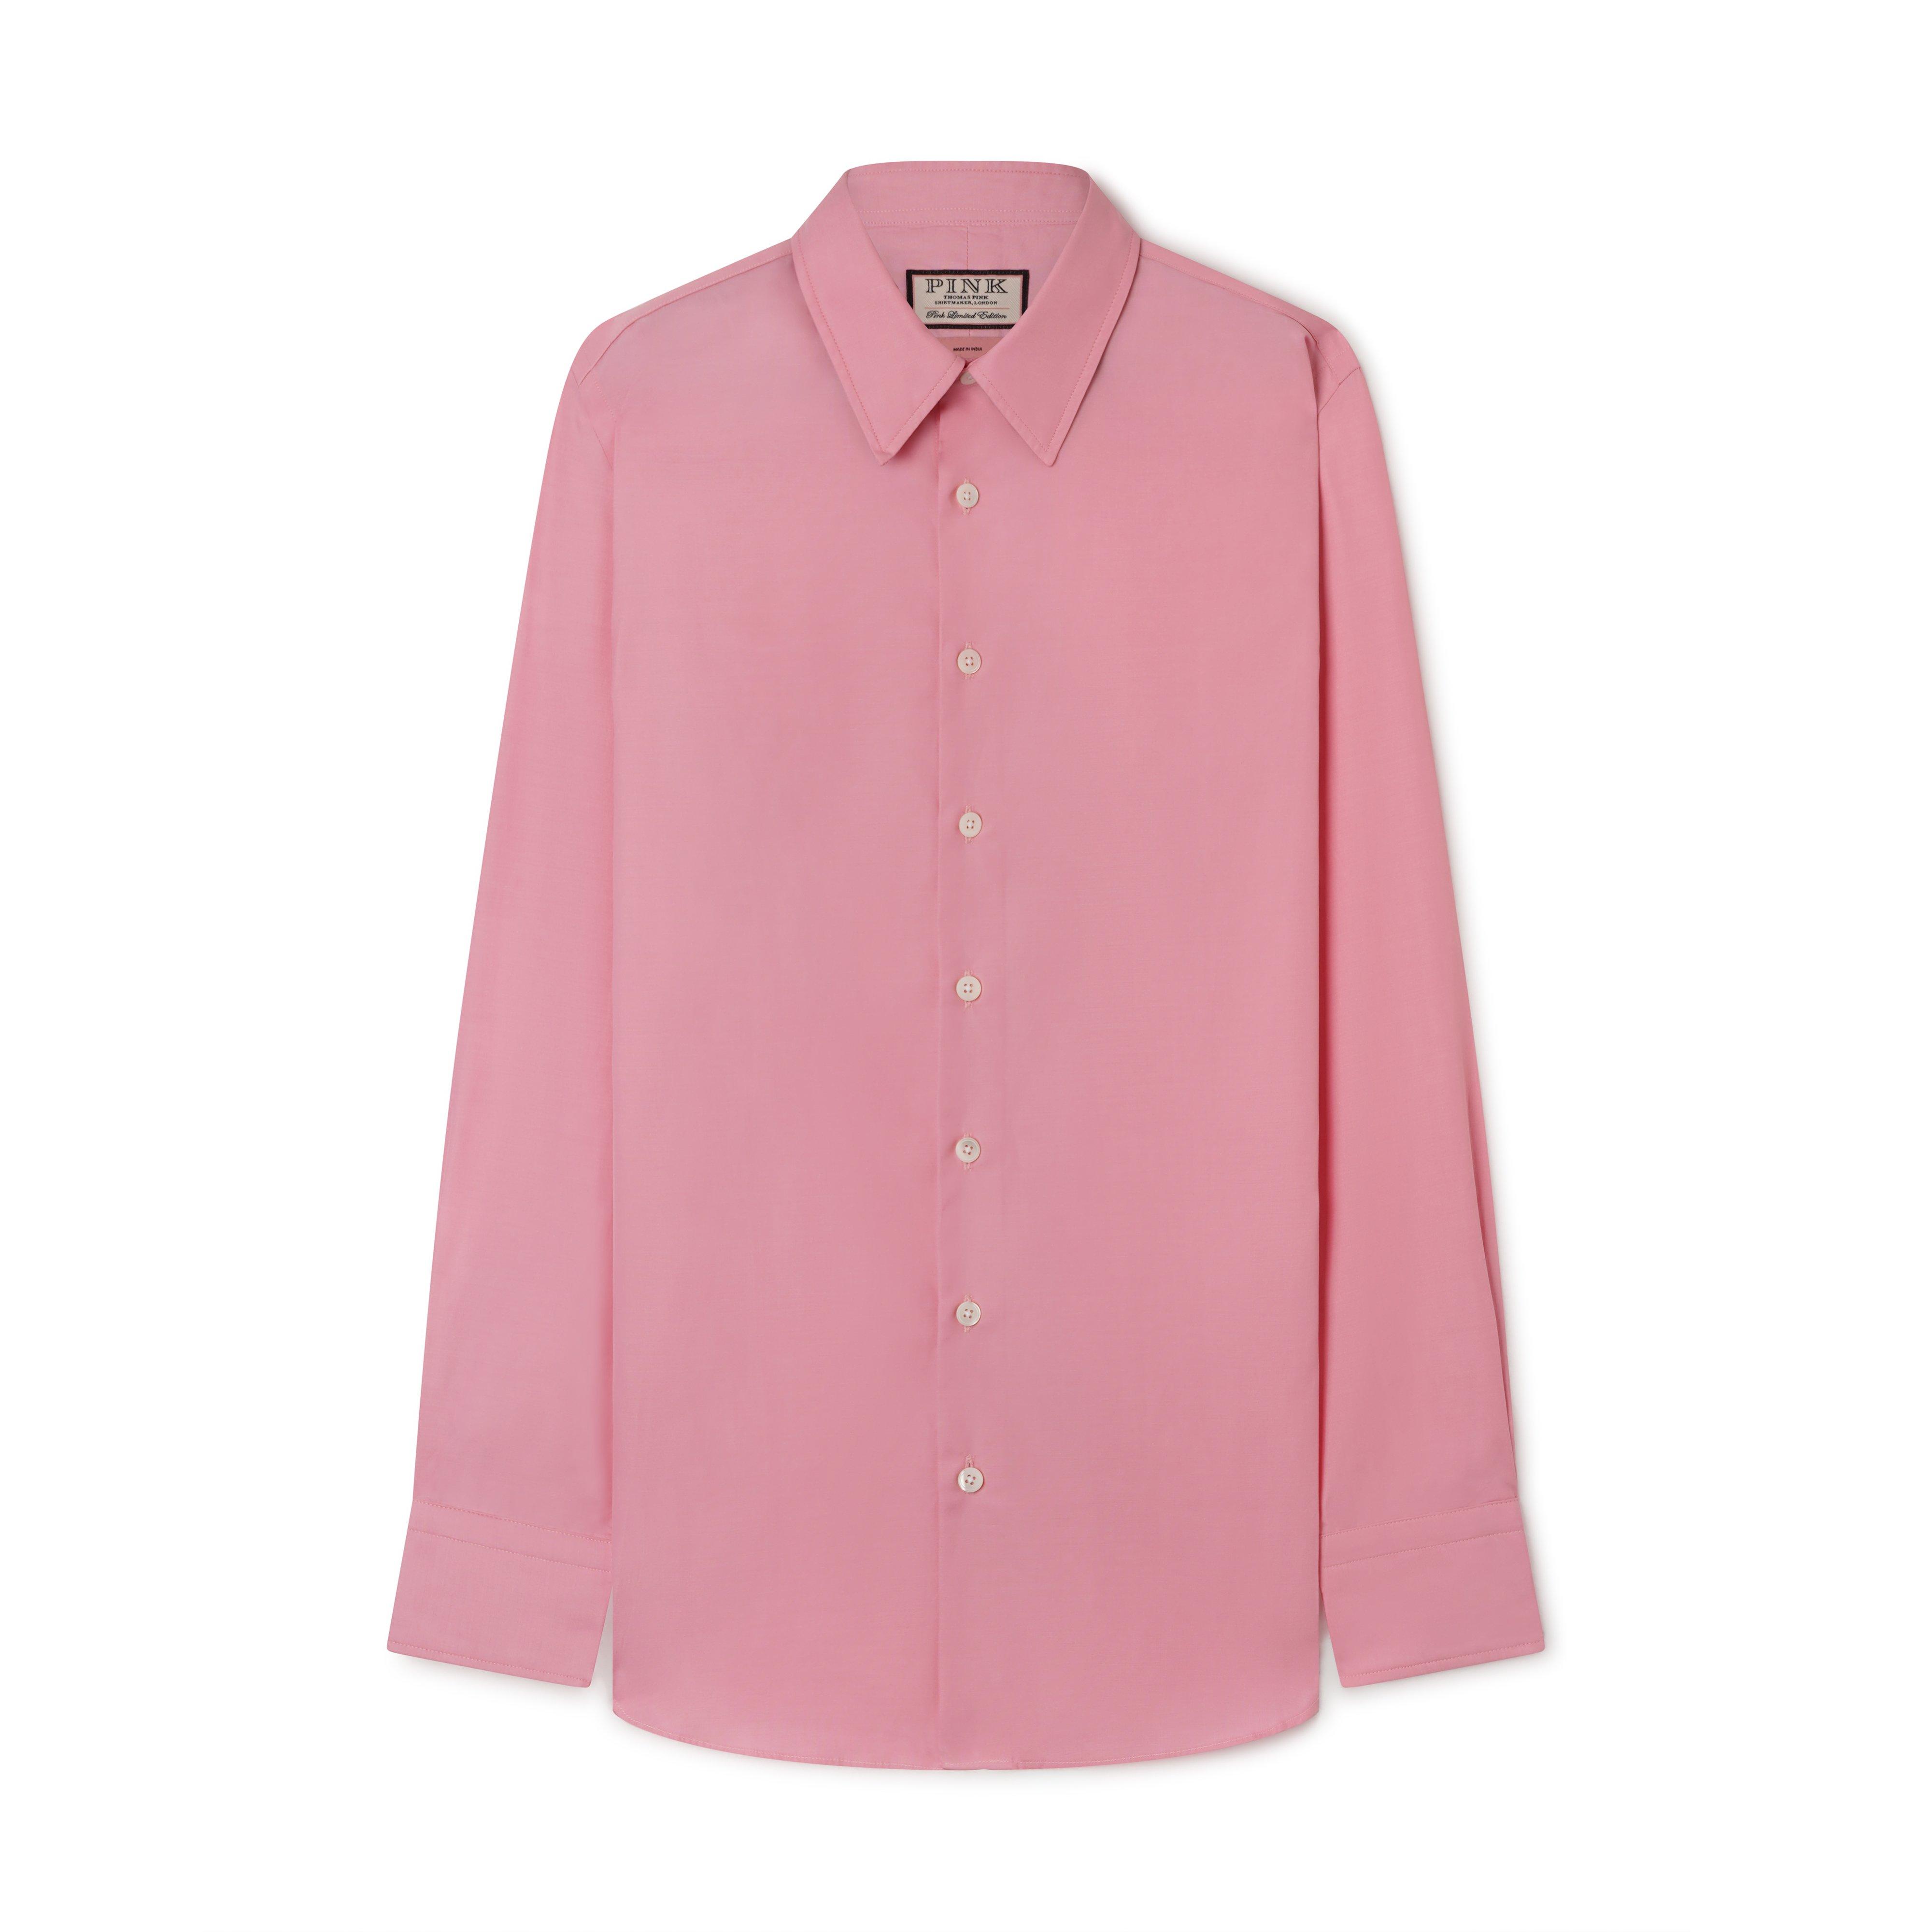 Thomas Pink Slim Fit Formal Ramses Poplin Shirt